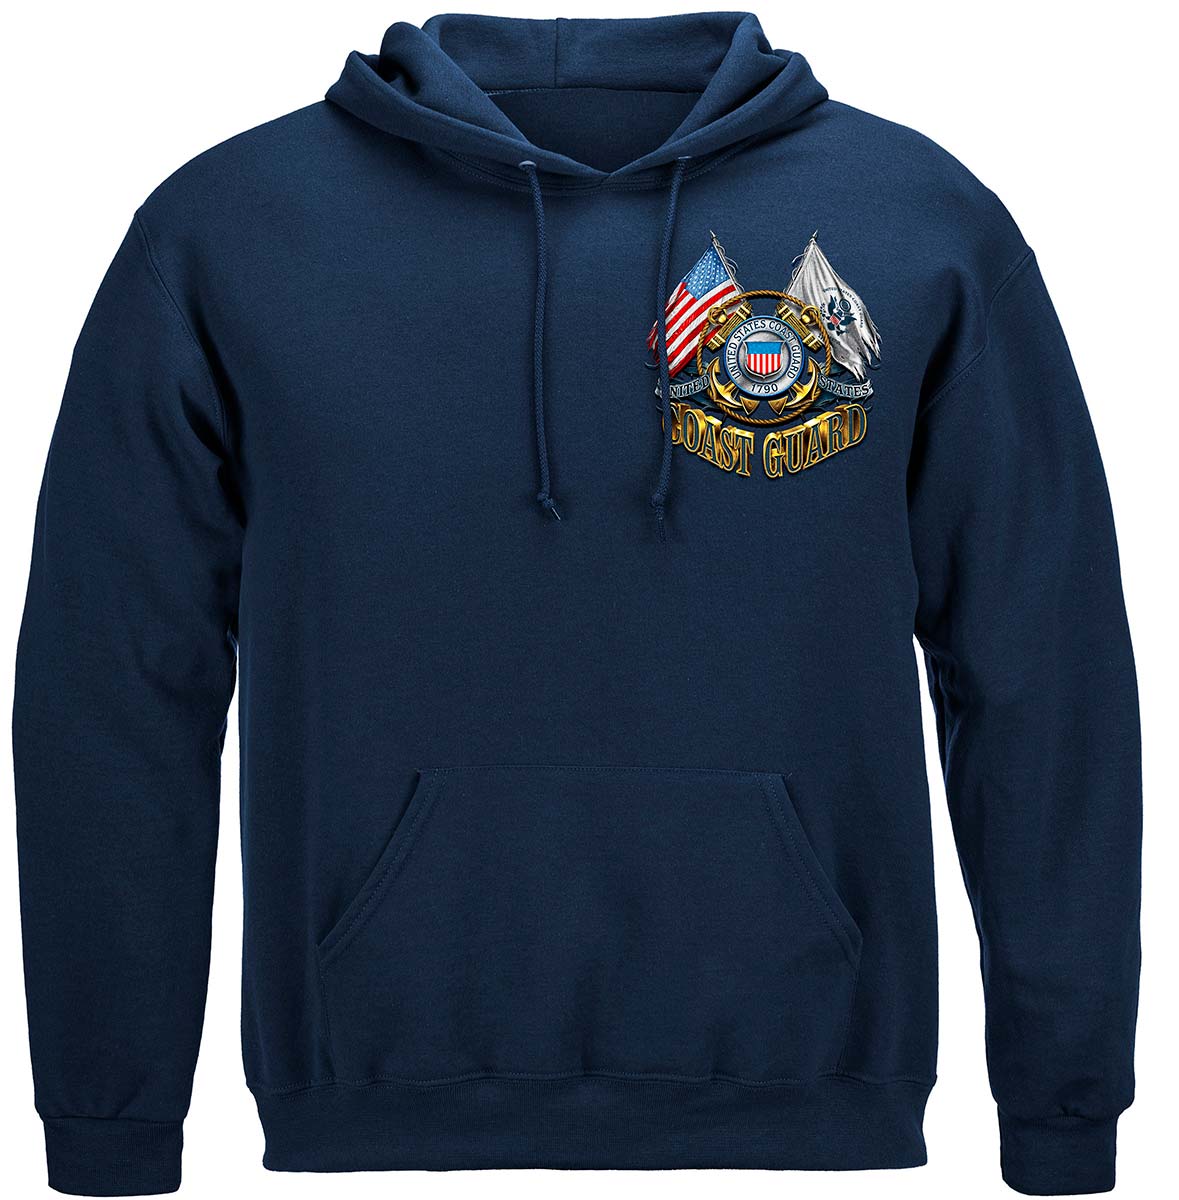 Double Flag Coast Guard Premium Hooded Sweat Shirt